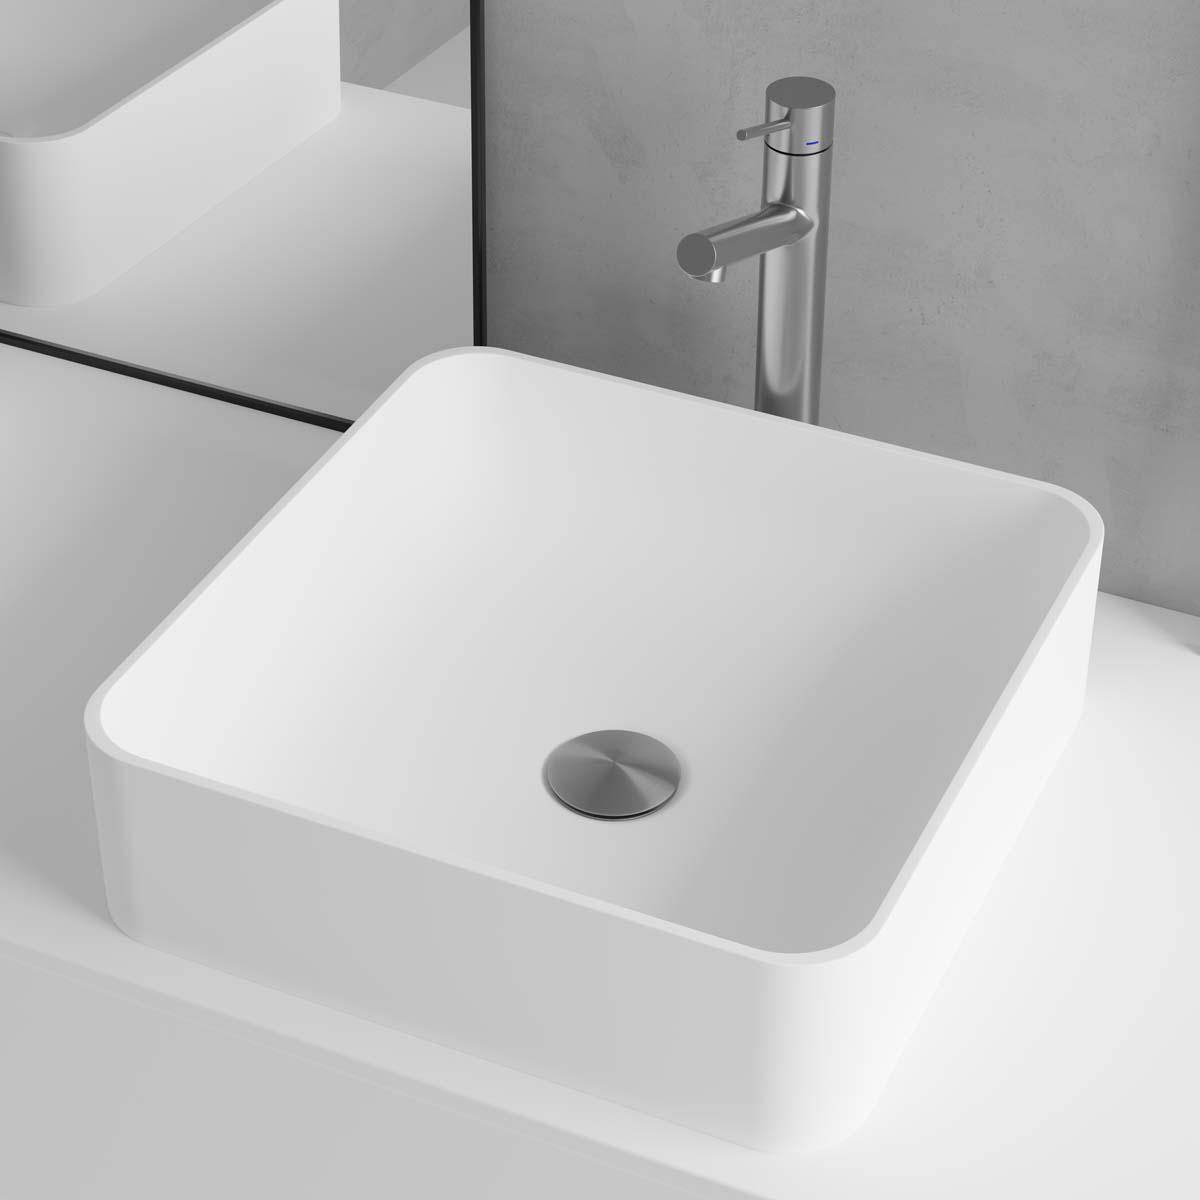 Primy S1 Solid Surface håndvask, Hvid